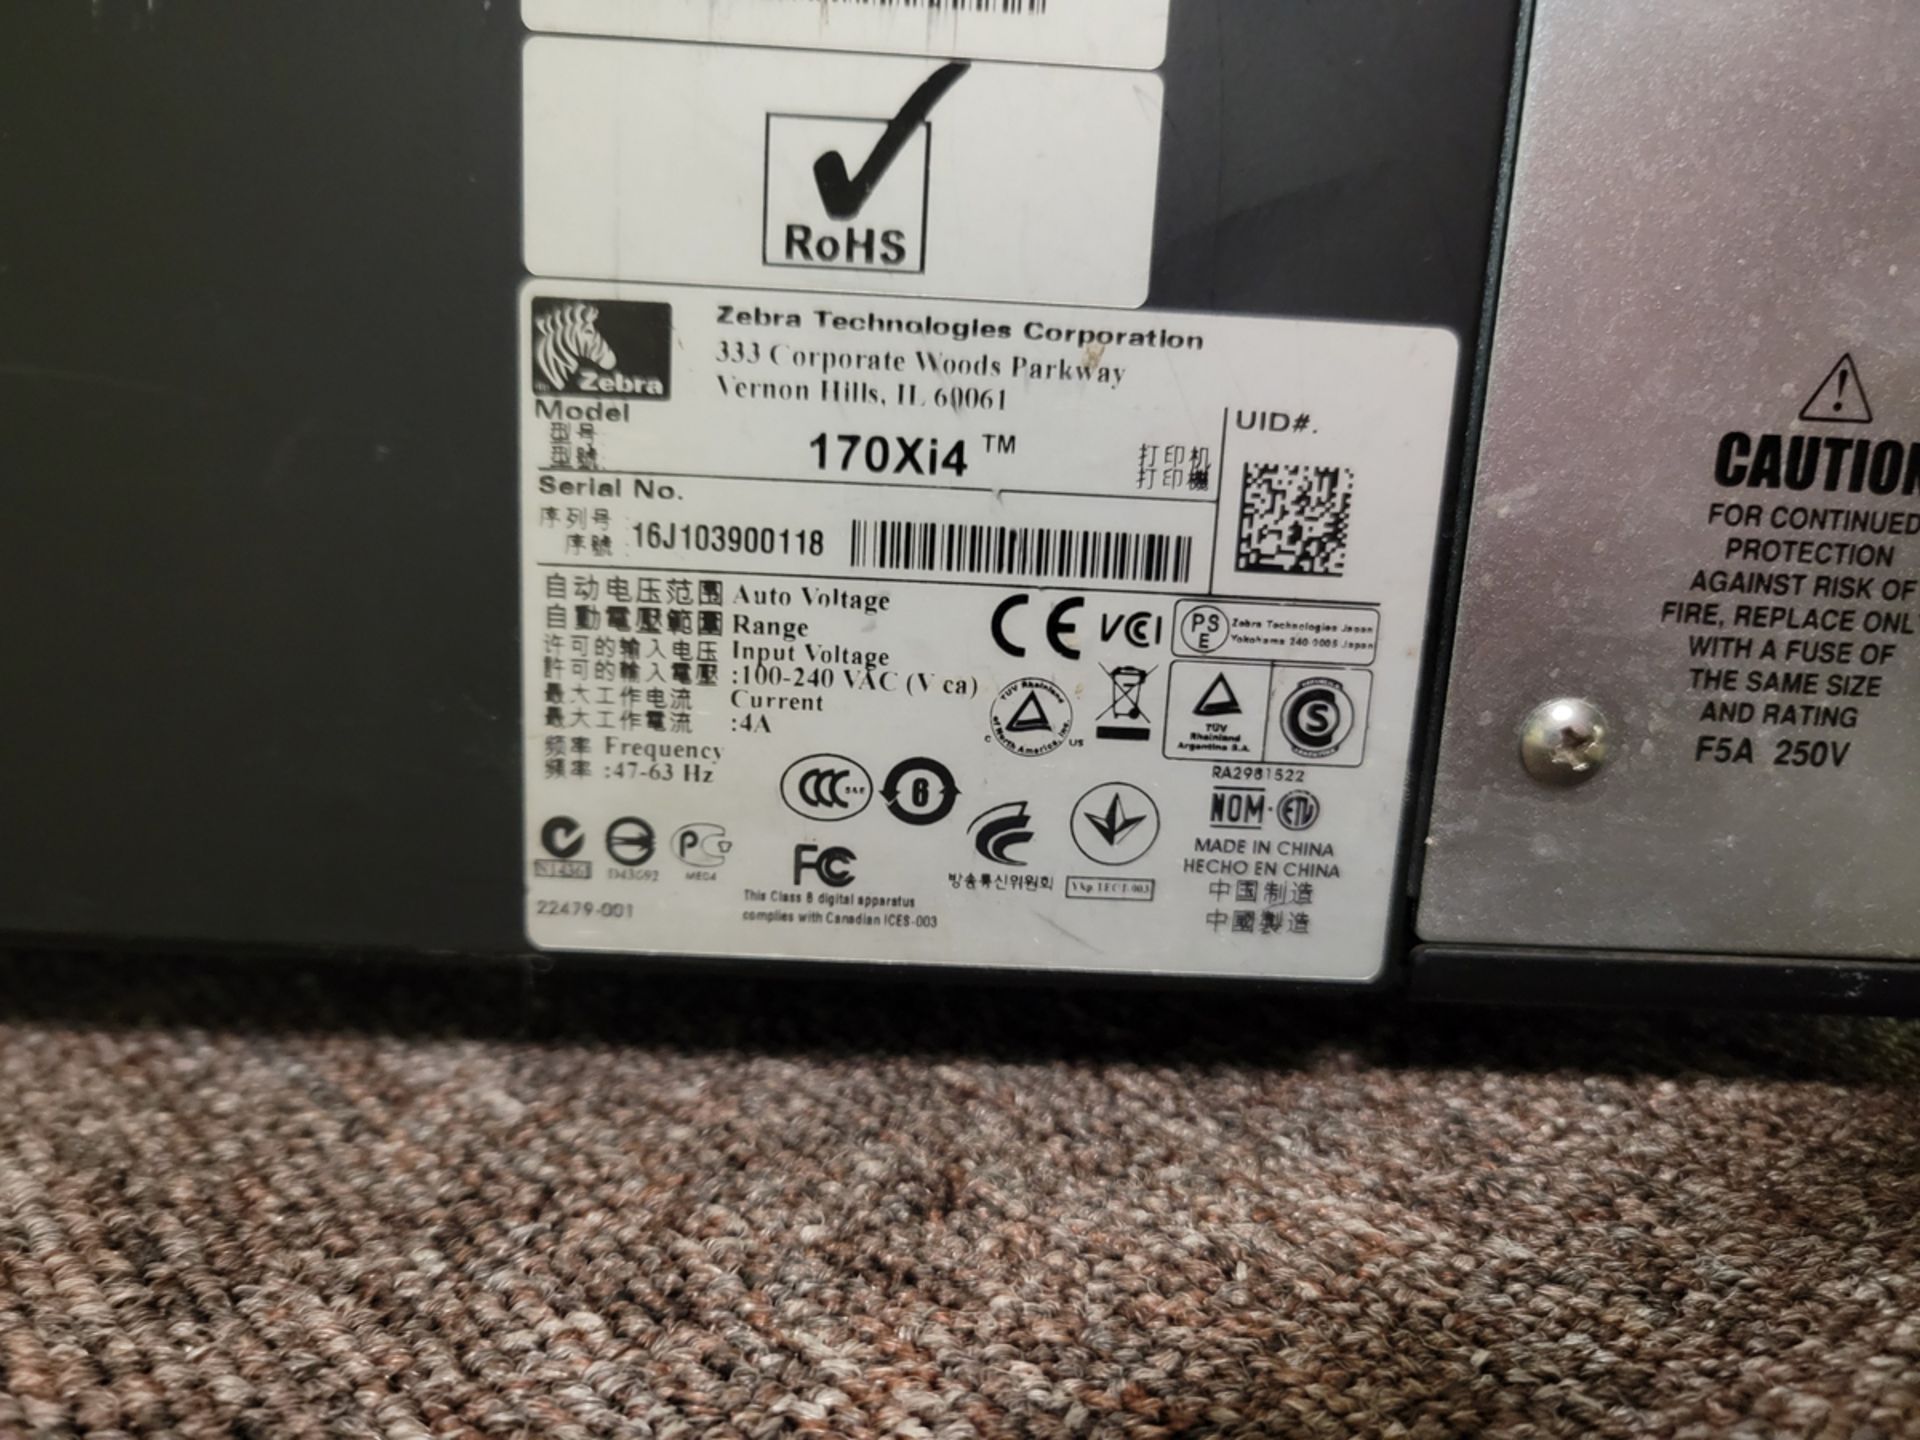 Zebra 170Xi4 Thermal Label Printer - Image 5 of 6